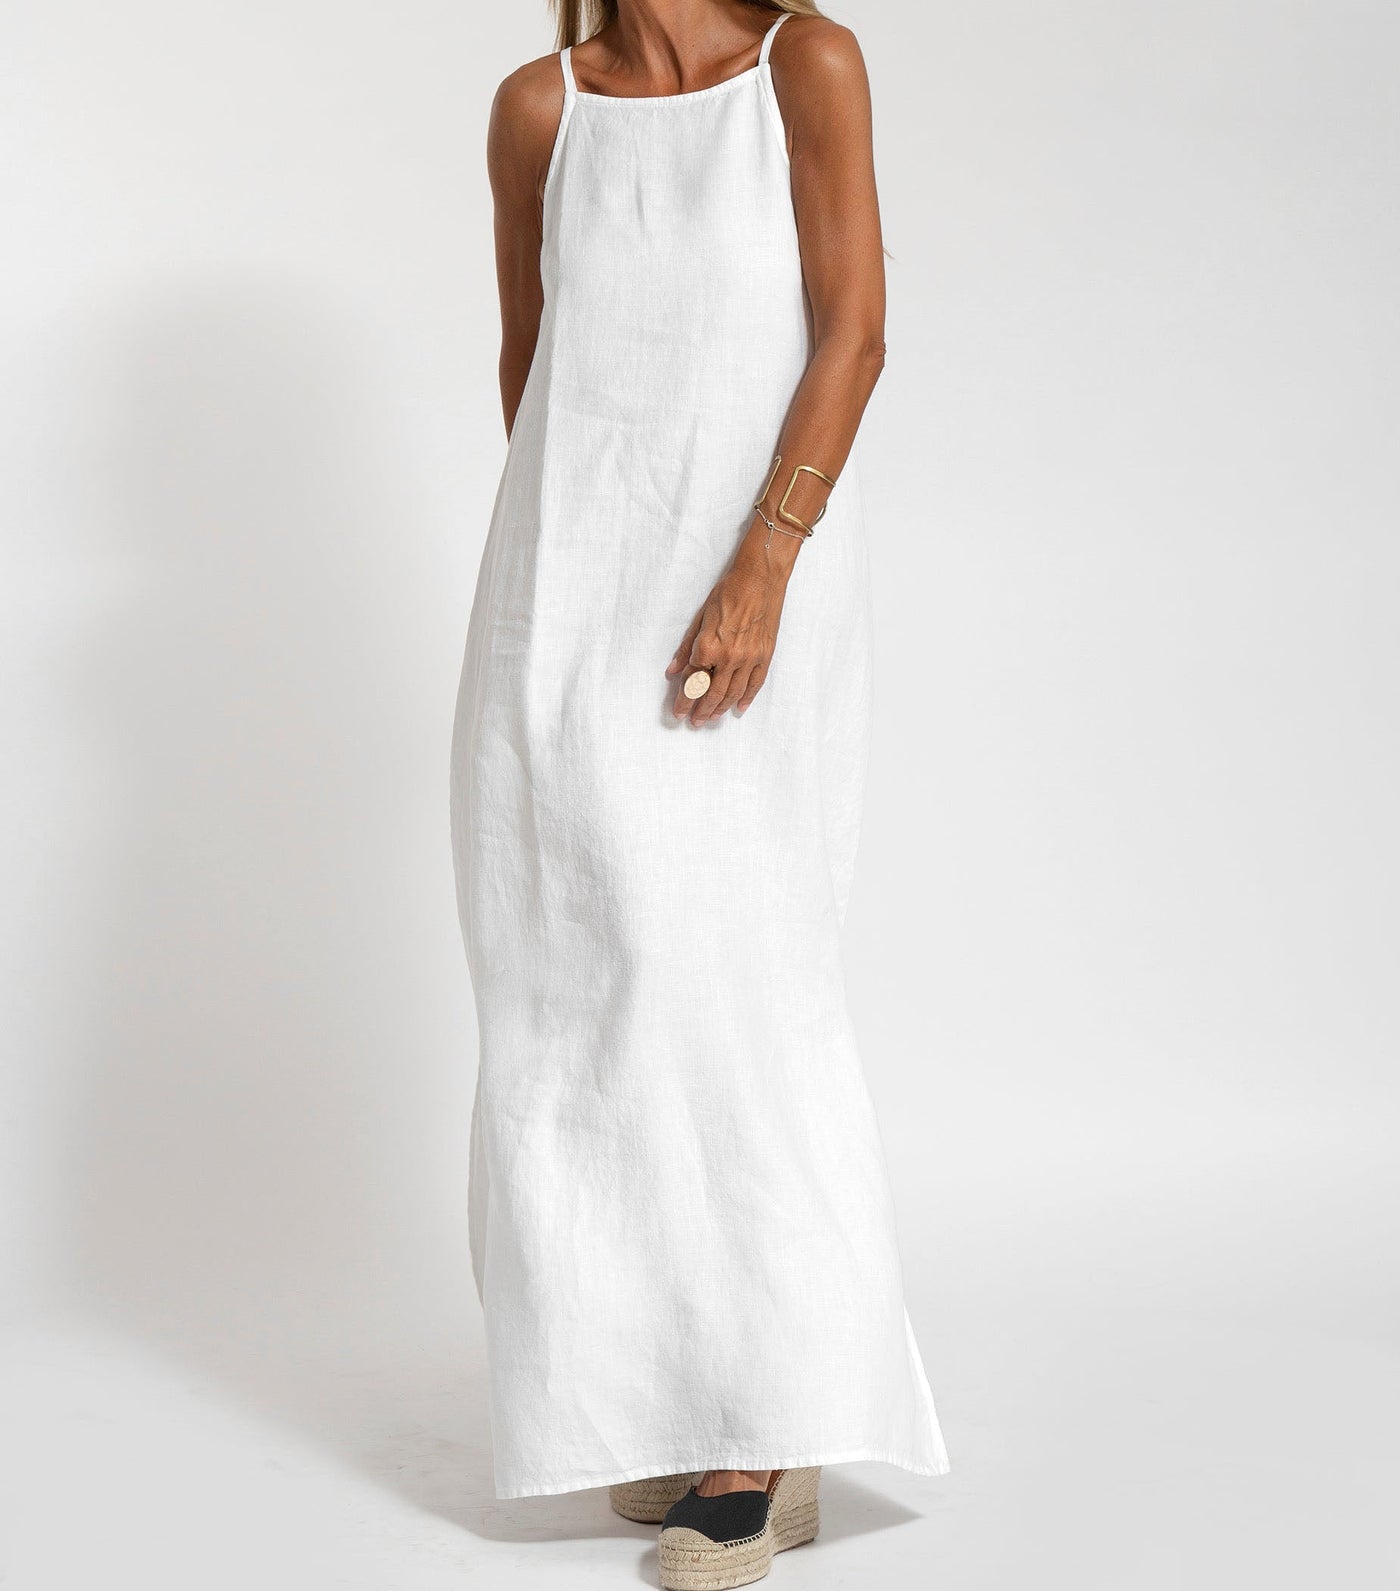 NTG Fad White / S Elegant Solid Color Cotton Linen Sleeveless Long Dress